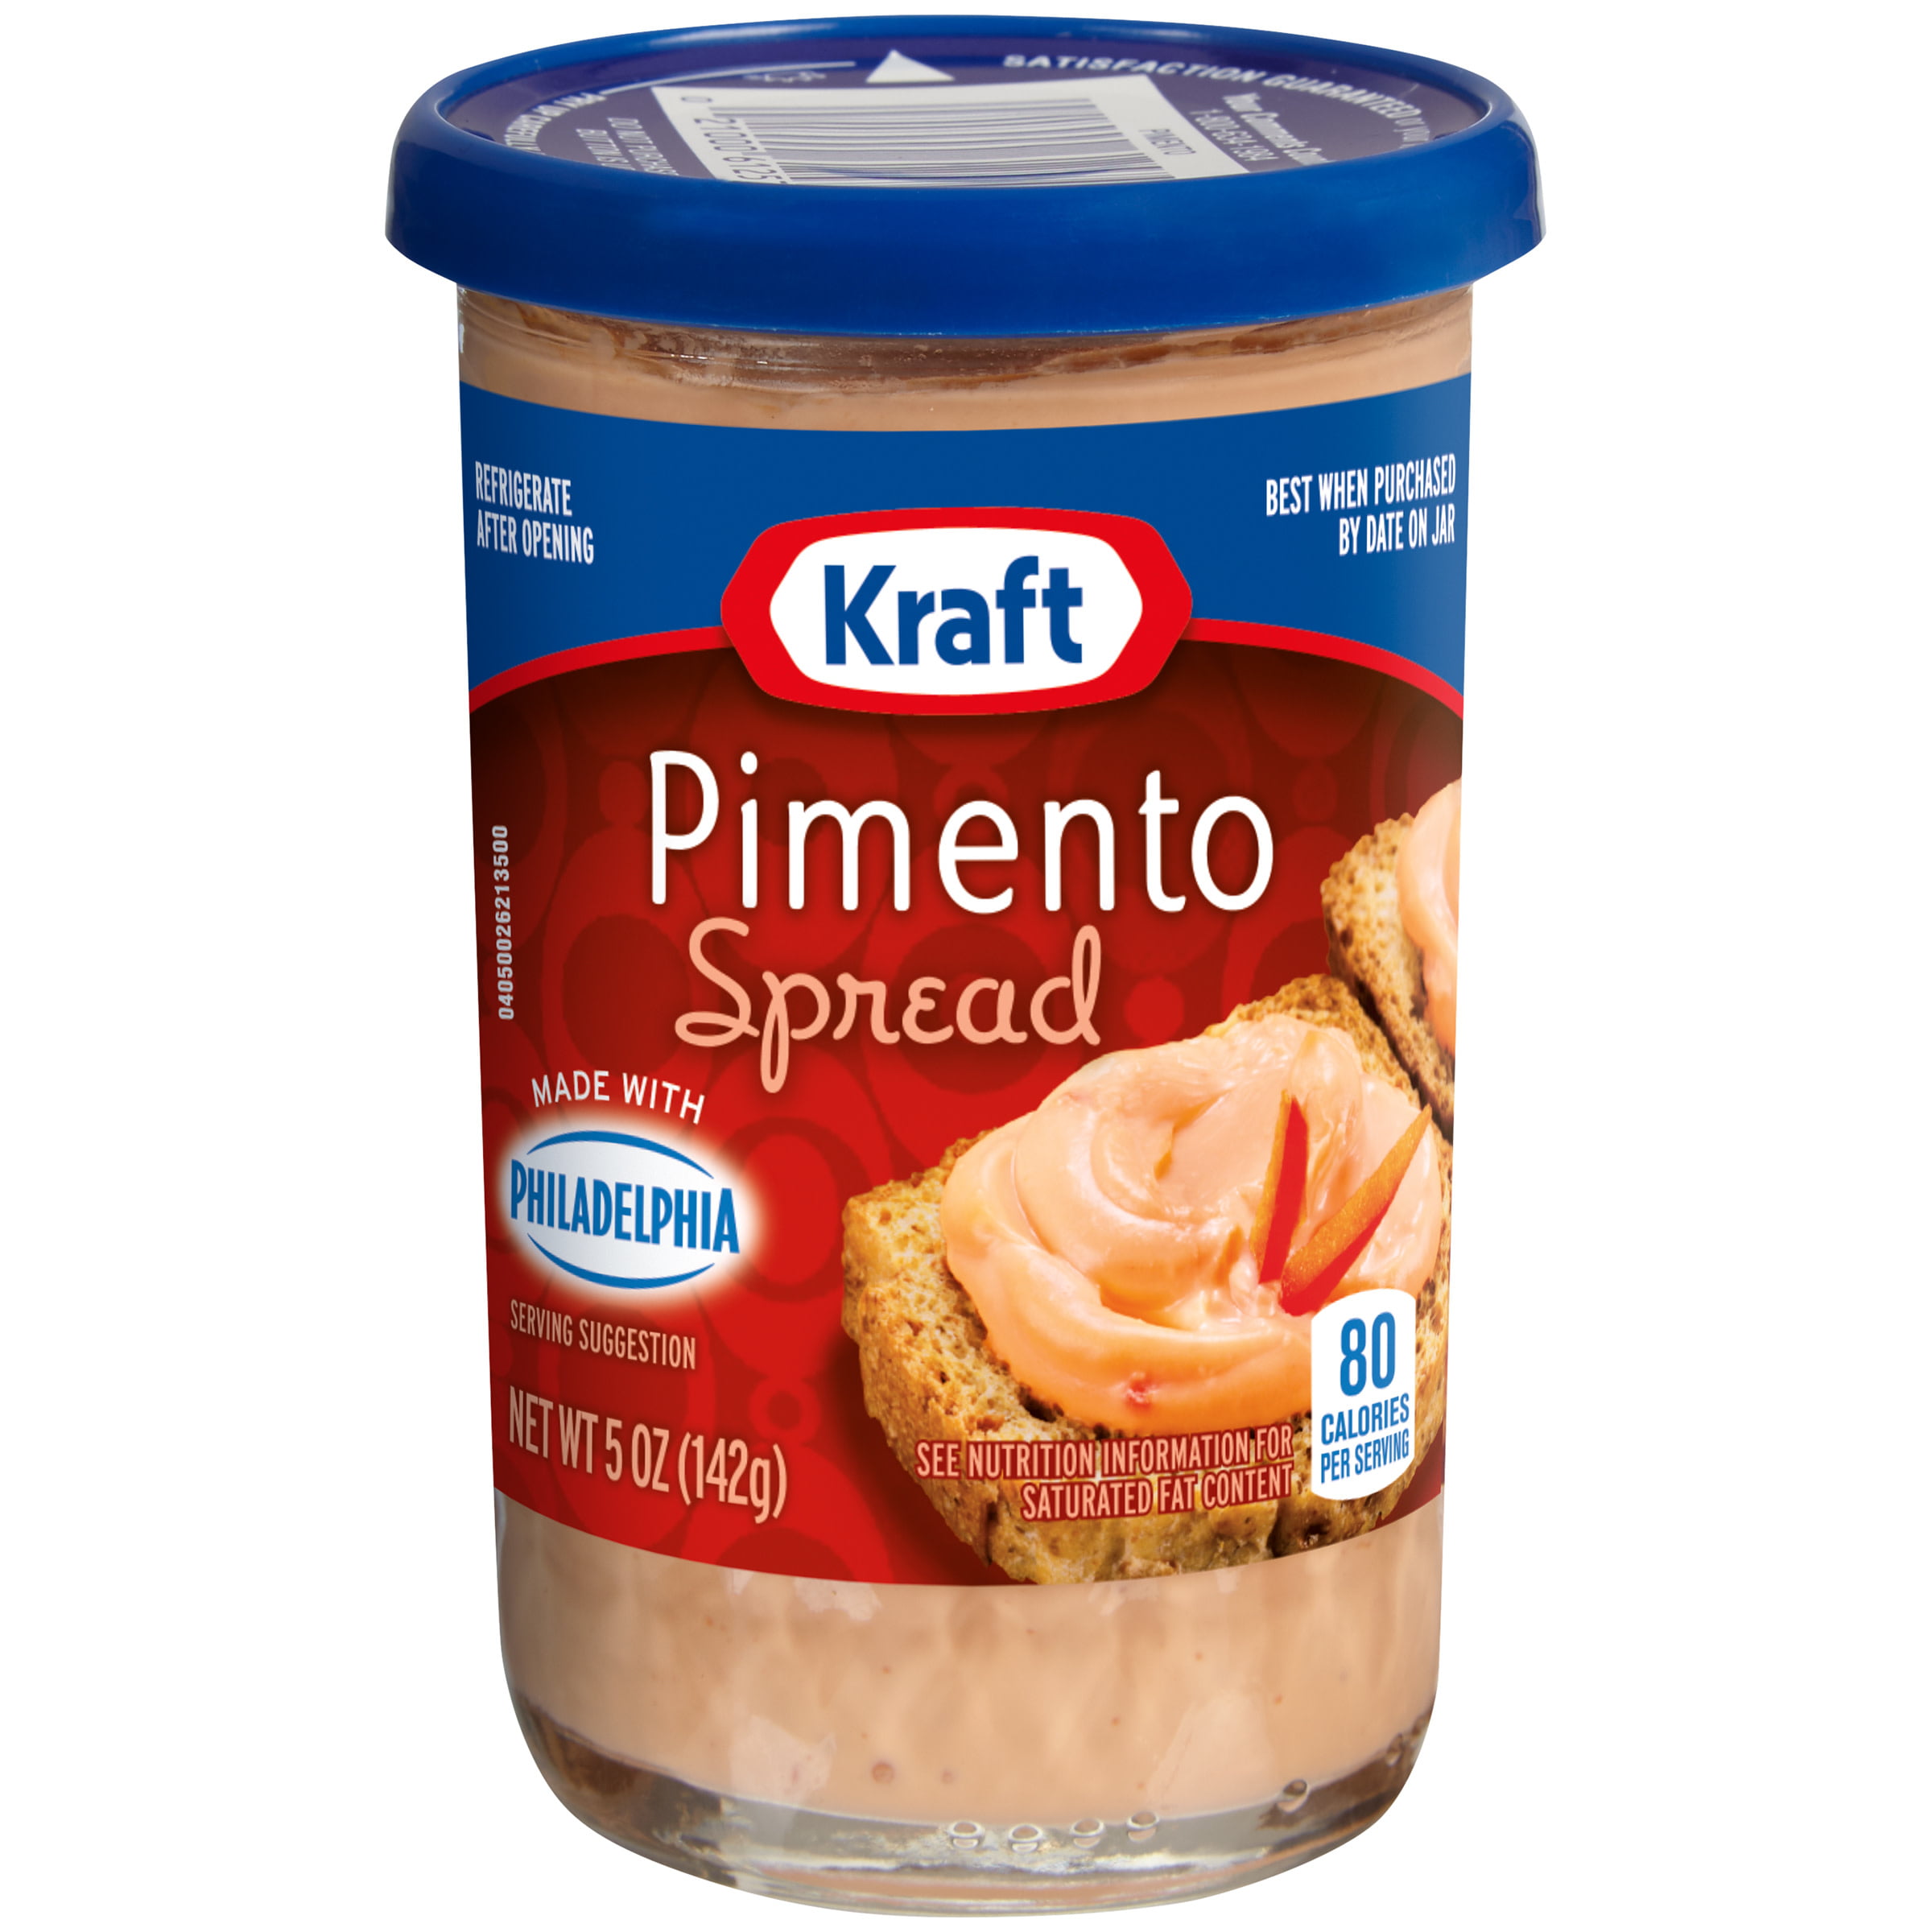 Kraft Pimento Spread with Philadelphia Cream Cheese, 5 oz Jar - Walmart.com...